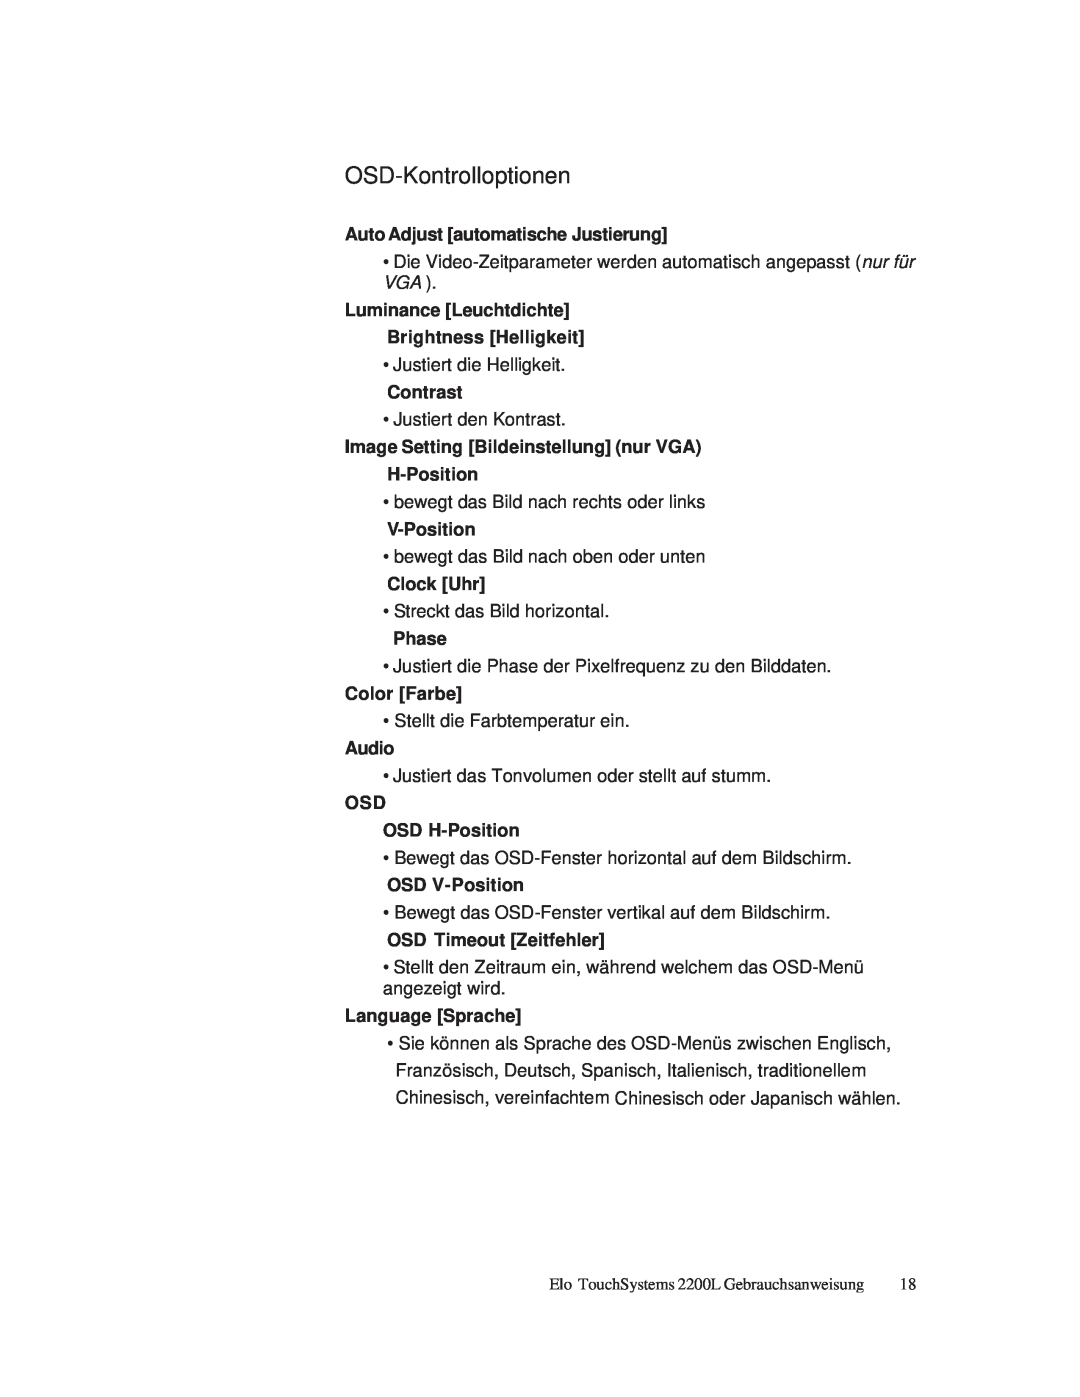 Elo TouchSystems ET2200L manual OSD-Kontrolloptionen 